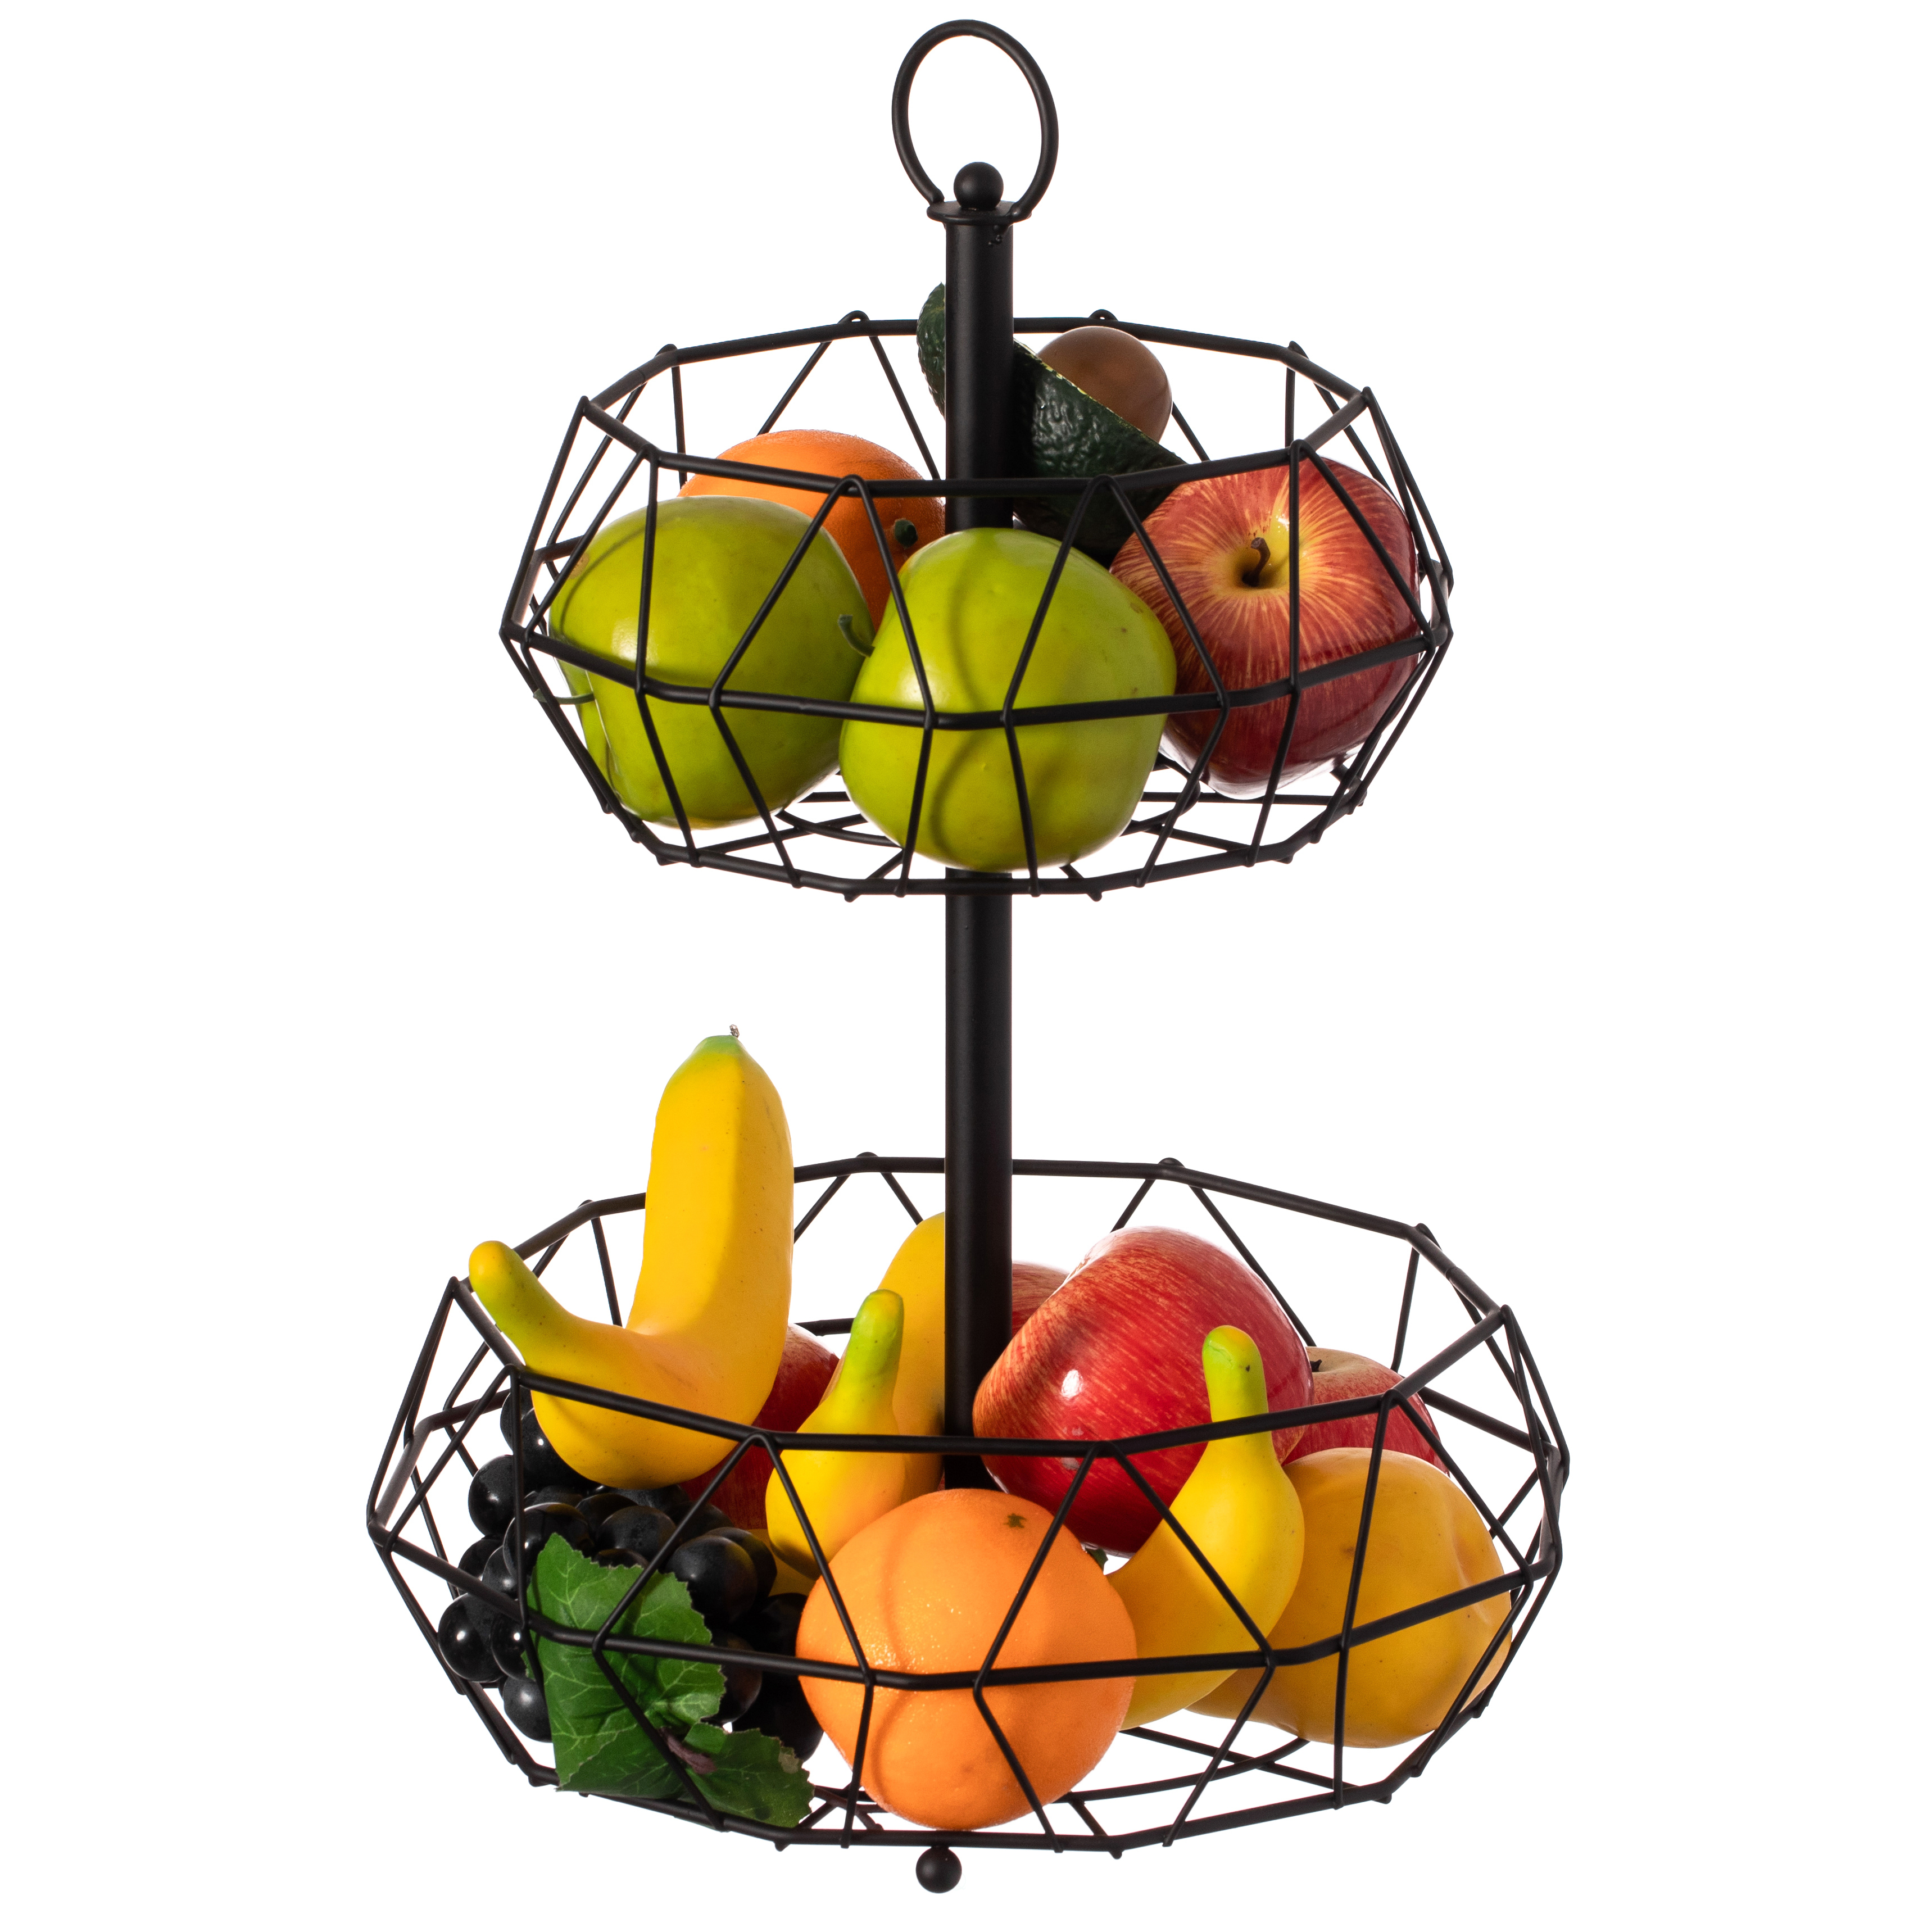 2 Tier Free Standing Countertop Fruit Basket For Kitchen Detachable Carbon Steel Stable Fruit Storage Organizer, Black